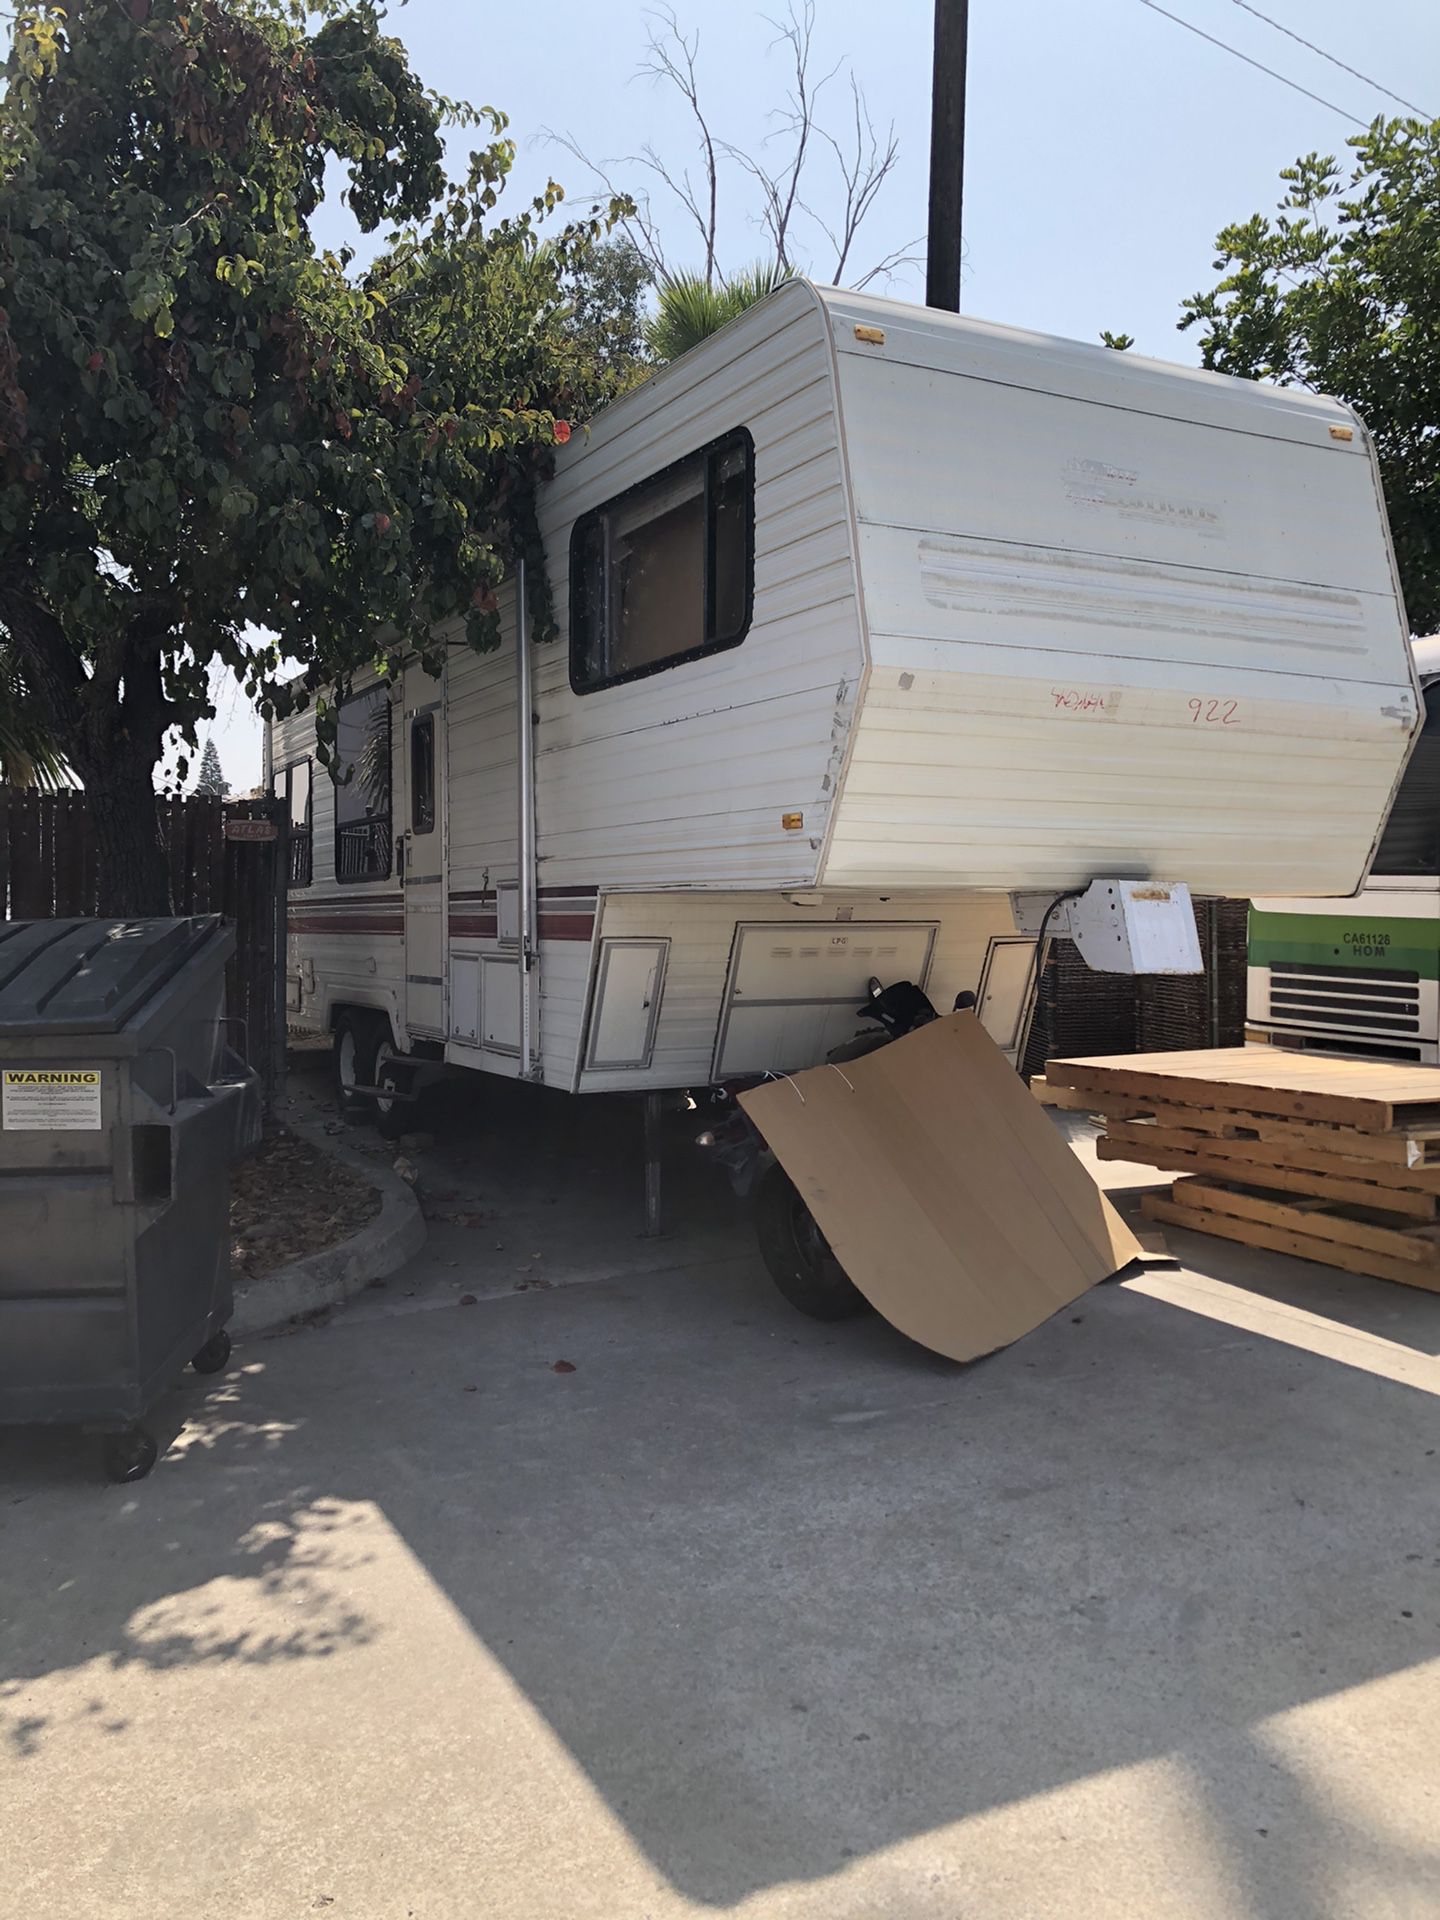 Taurus mobile home trailer